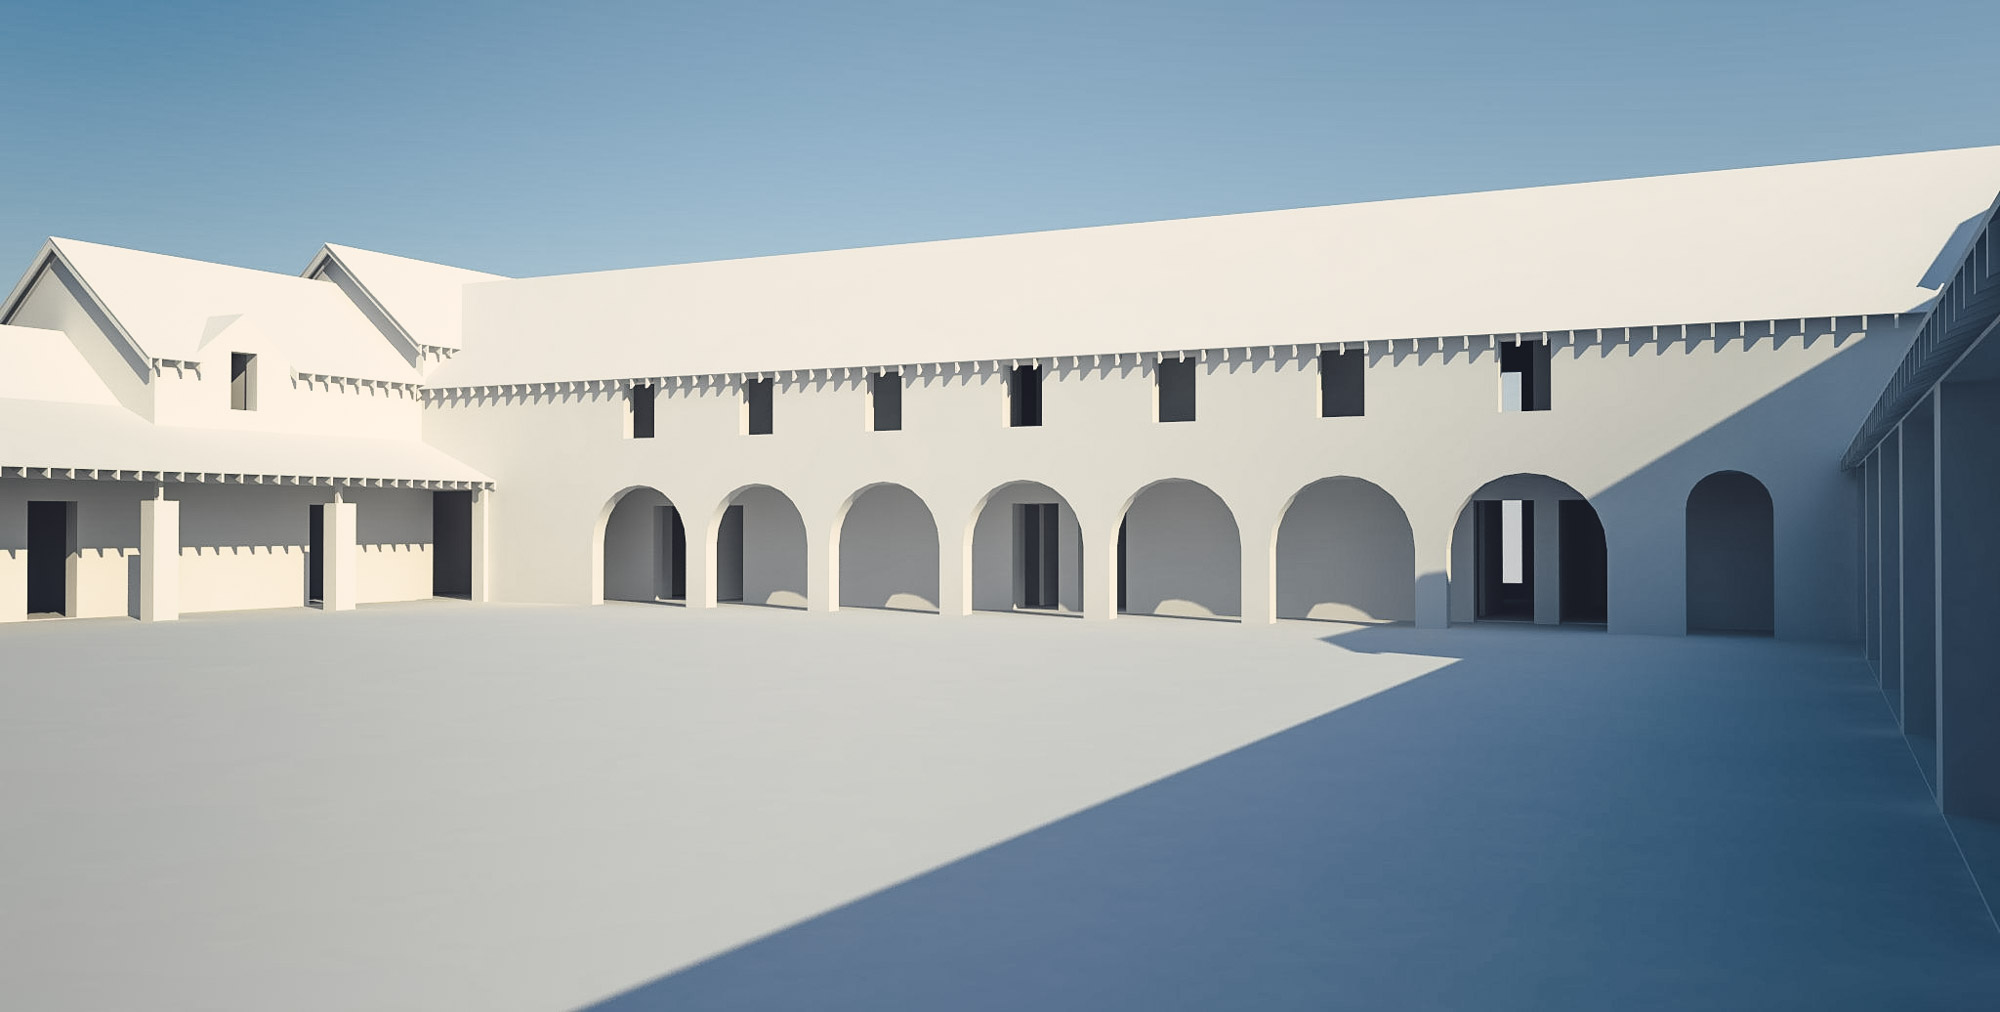 Concept Arches